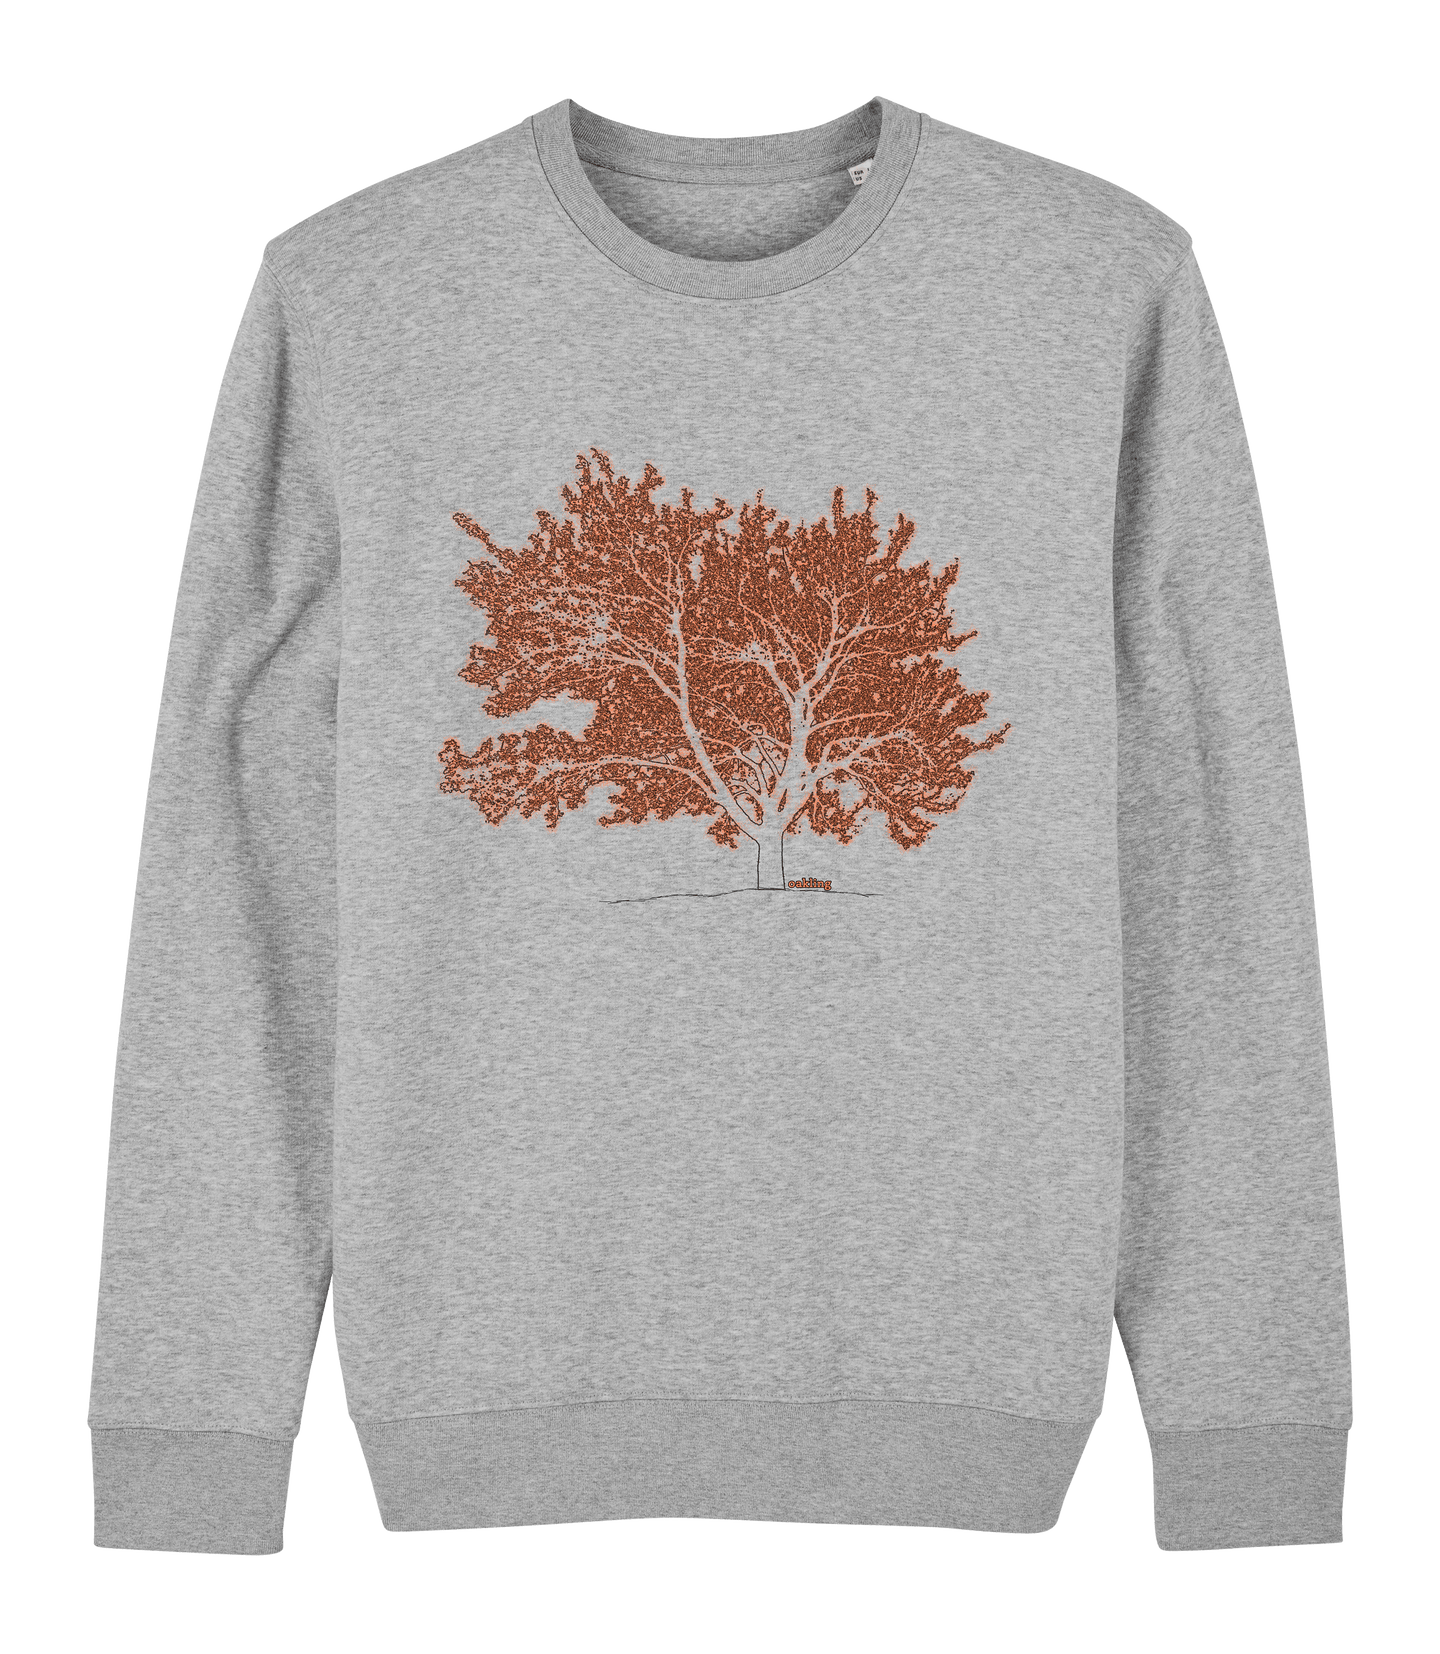 Organic Sweatshirt - The Tree